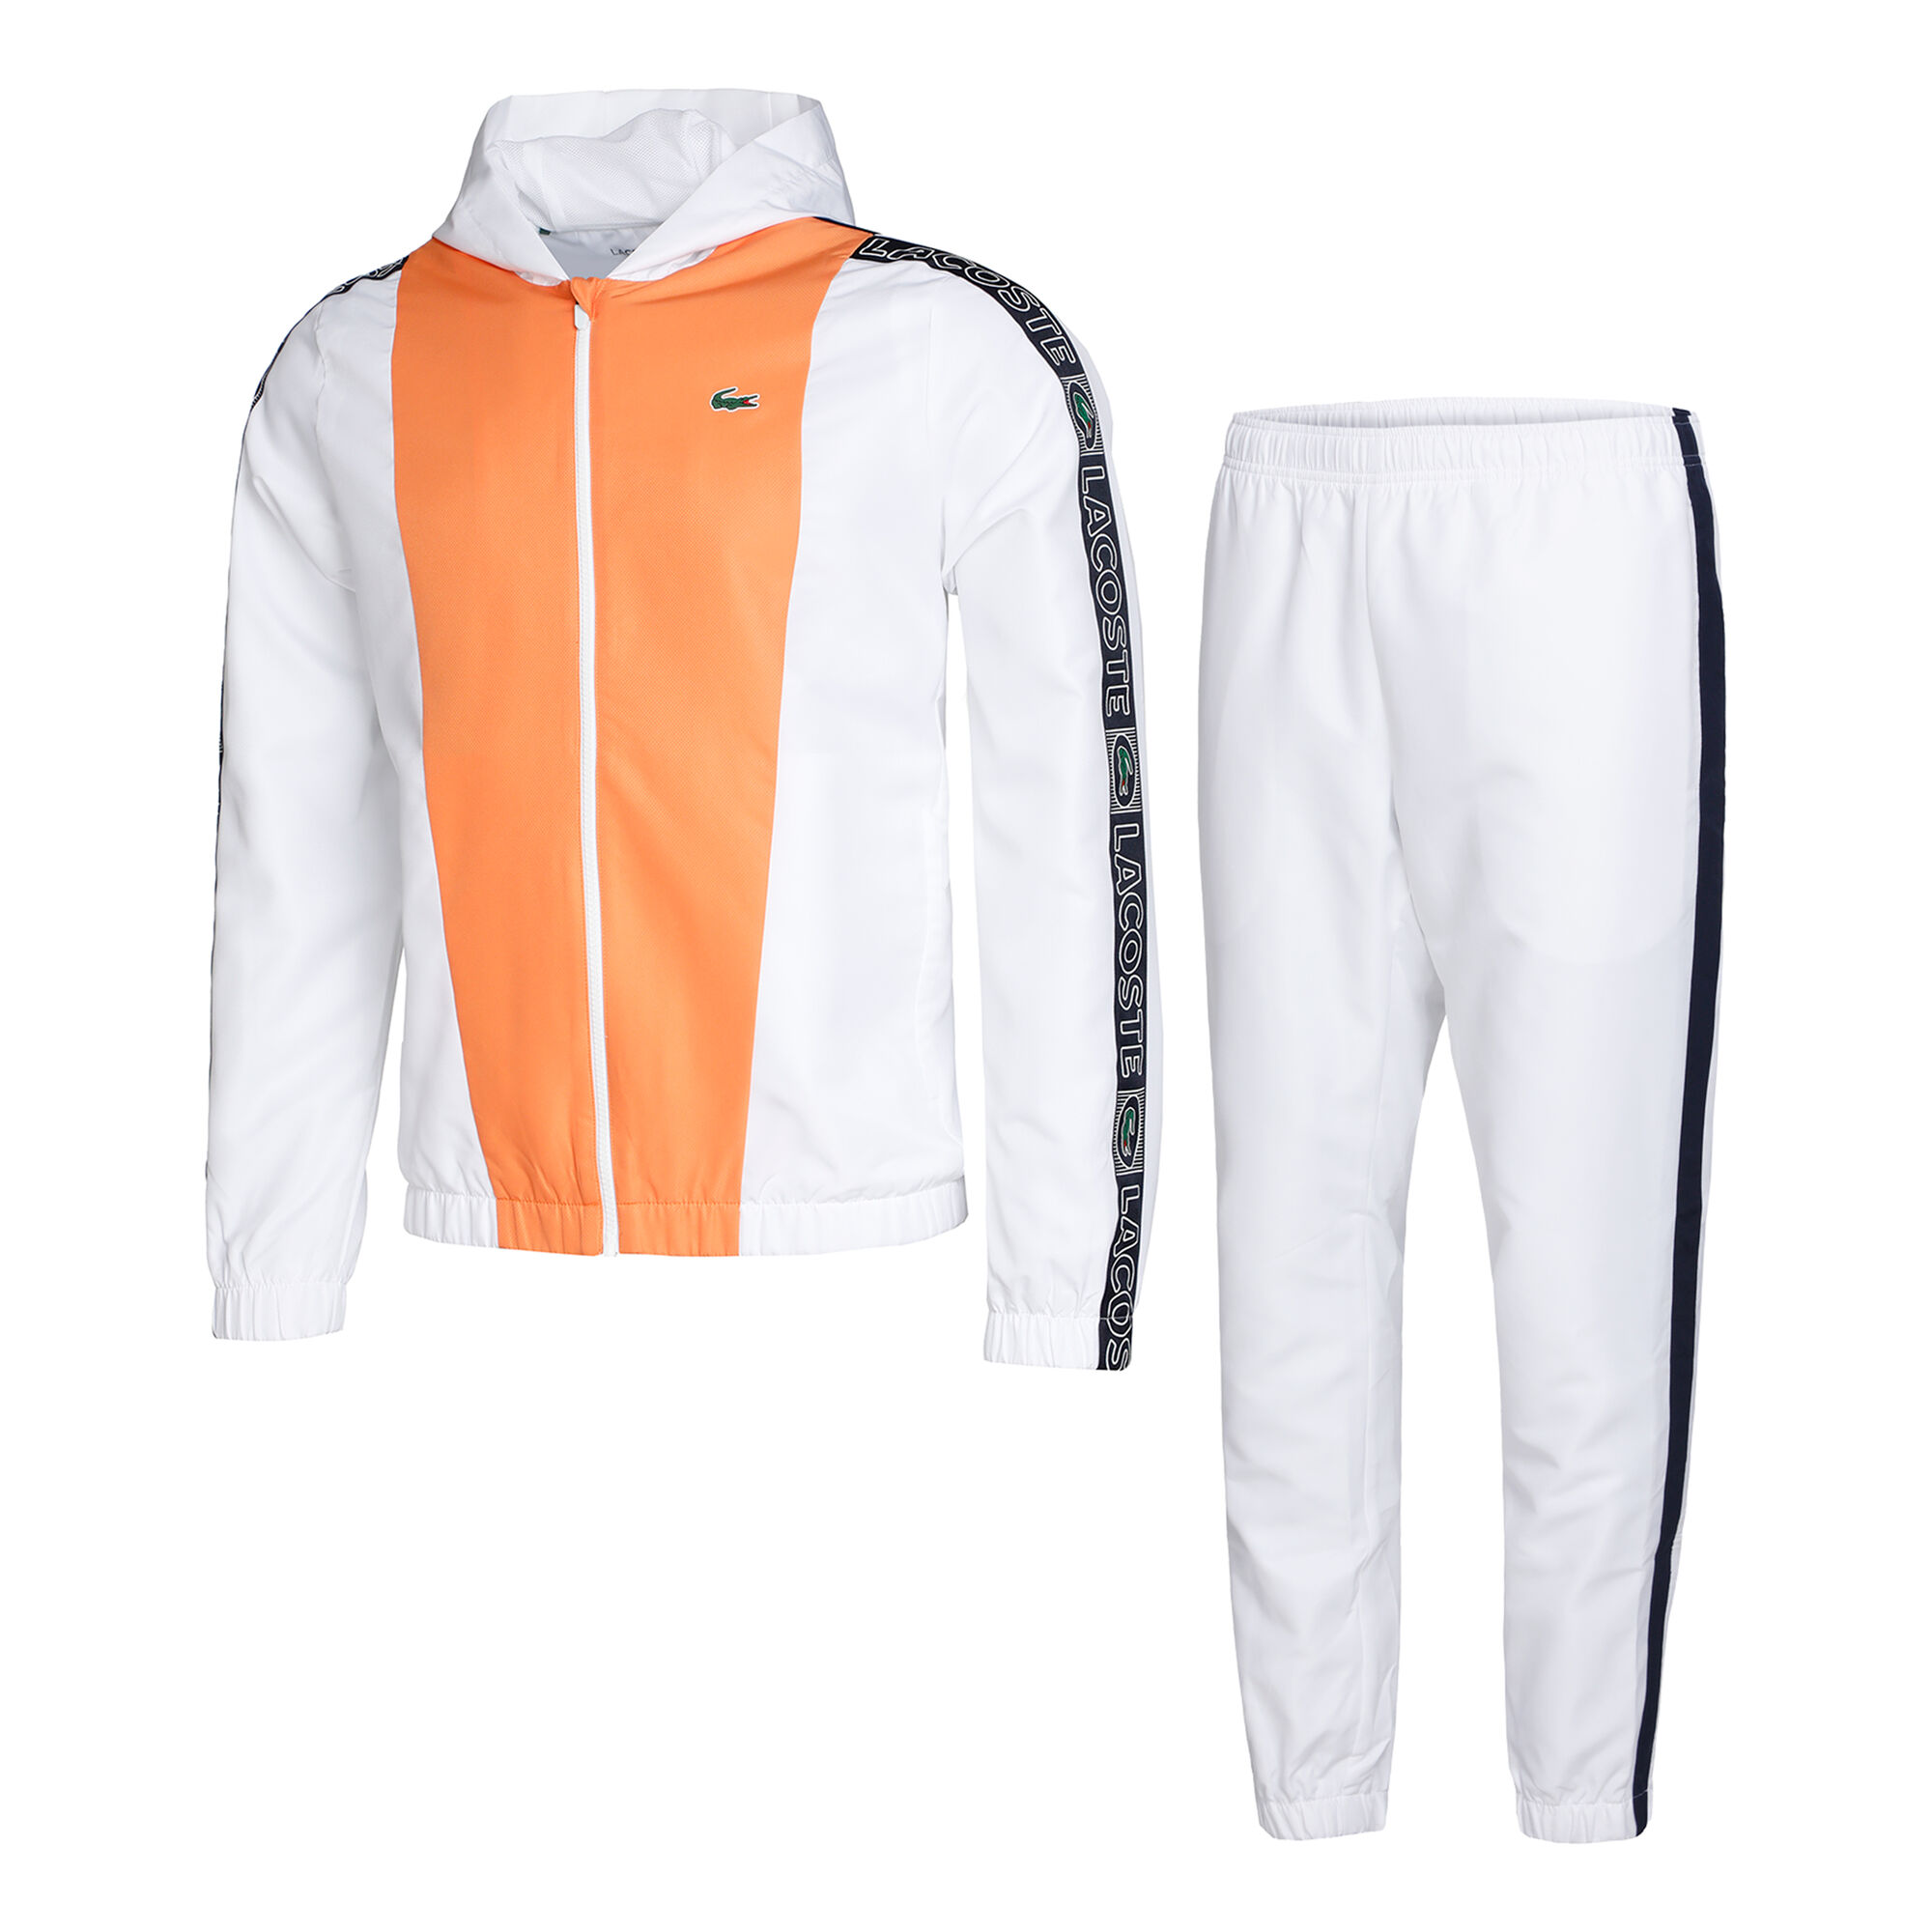 Speels deadline zelf Lacoste Tennis Trainingspak Heren - Wit, Oranje online kopen | Tennis-Point